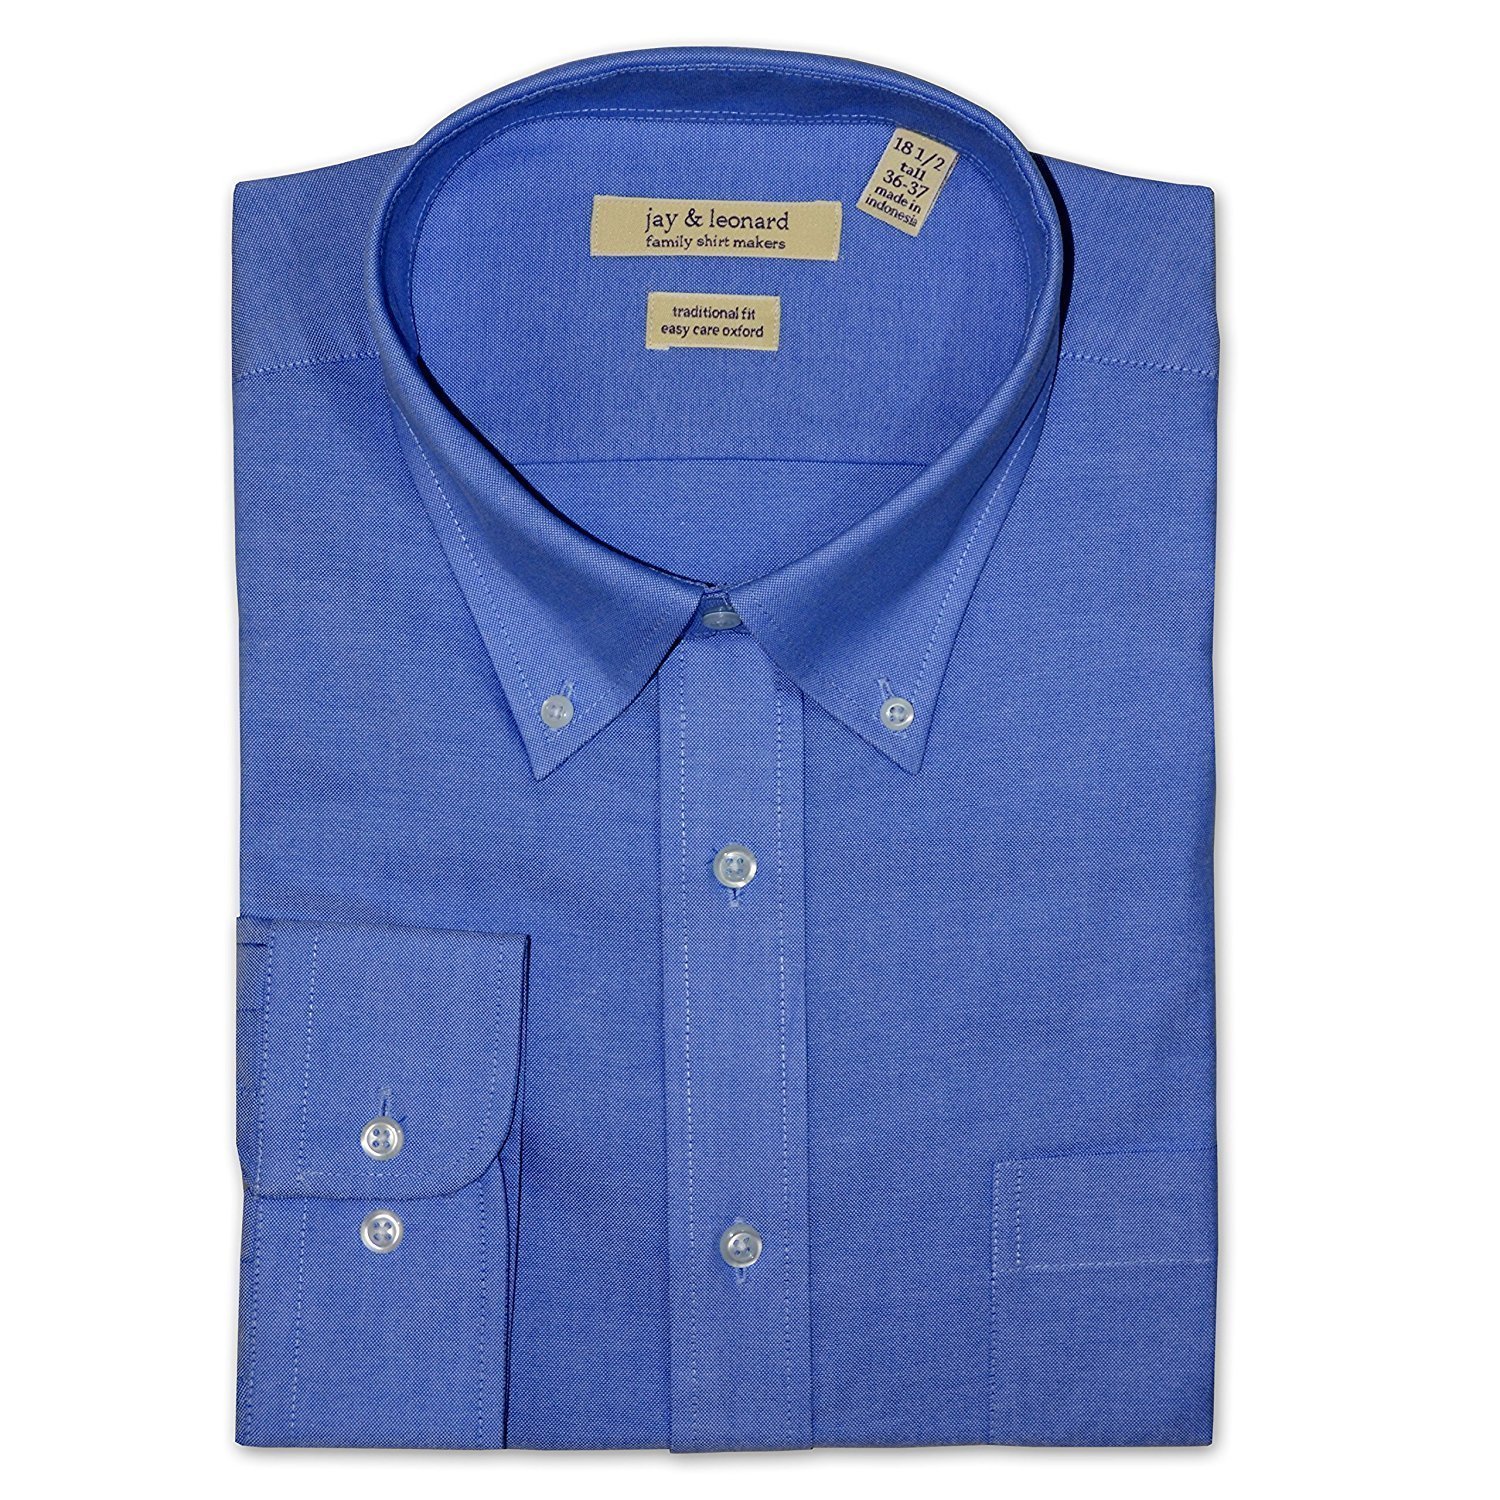 Modena Jay & Leonard Men's J200BDR Long Sleeve Button Down Oxford Shirt - French Blue - 15 2/3 - image 1 of 1